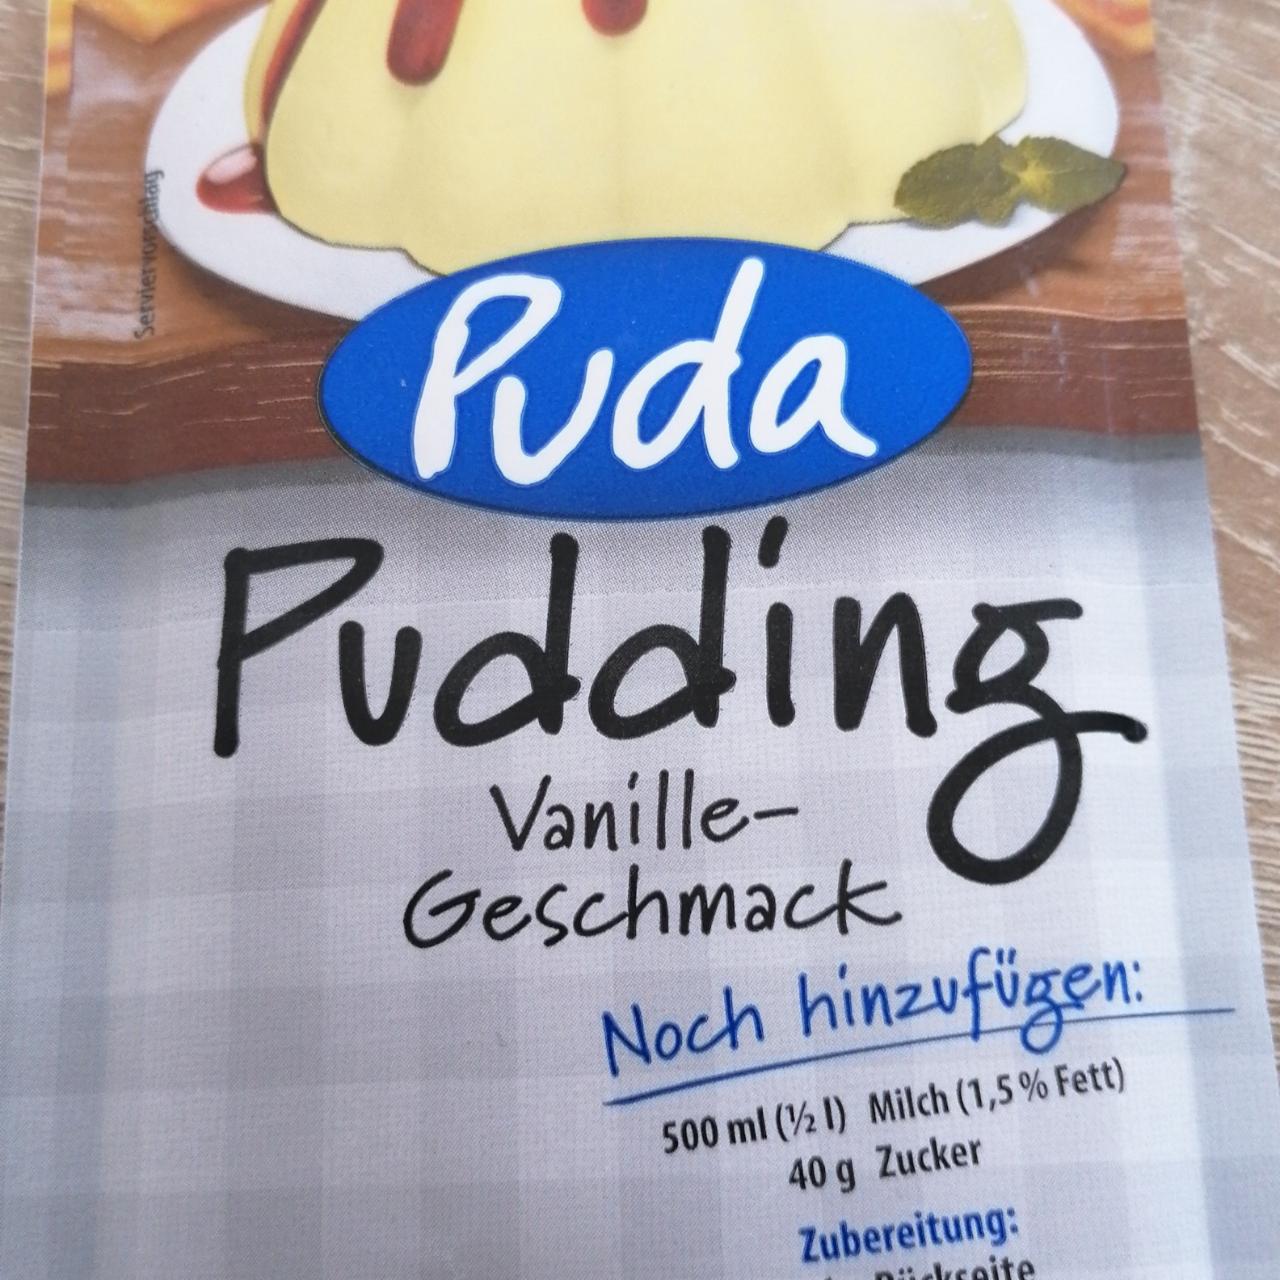 Fotografie - Pudding Vanille-Geschmack Puda